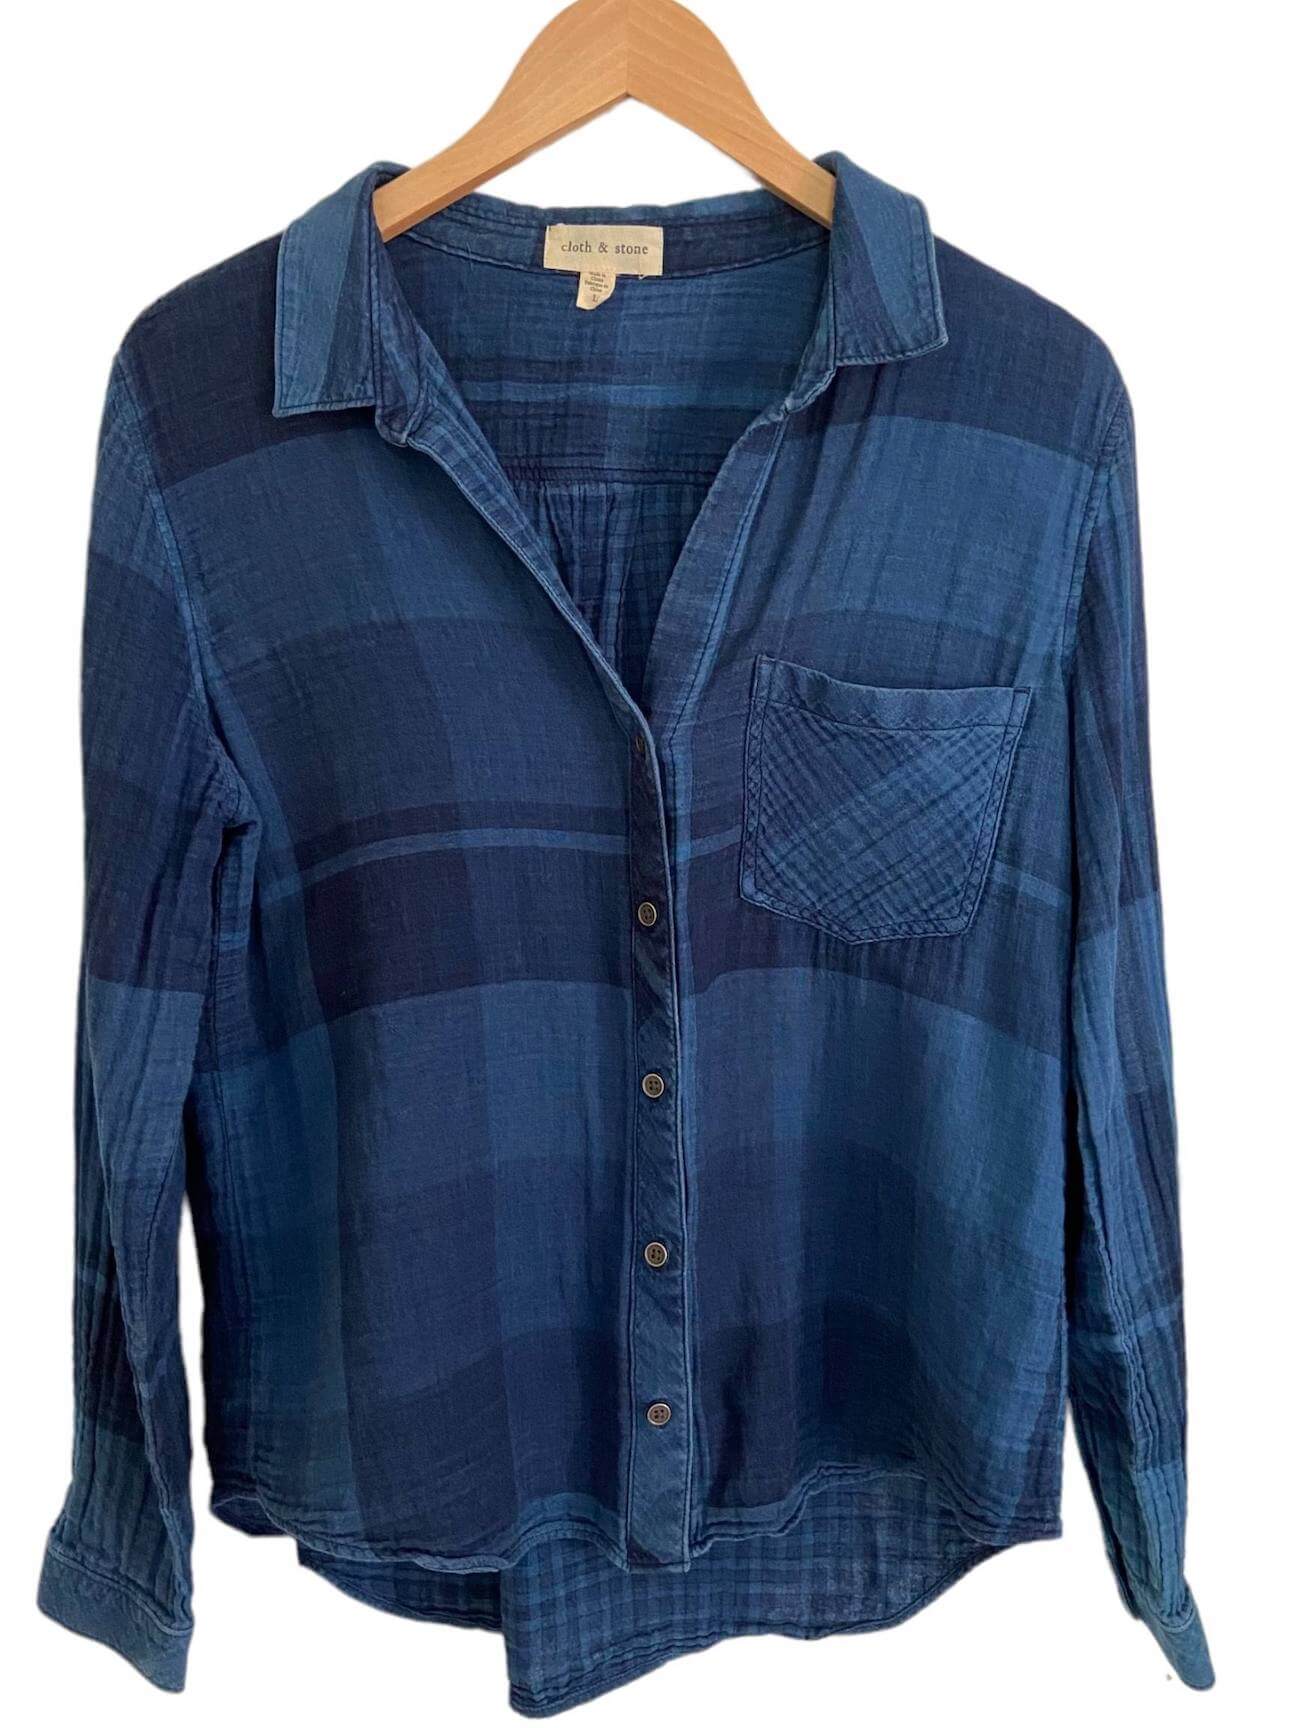 Soft Summer CLOTH & STONE blue plaid shirt